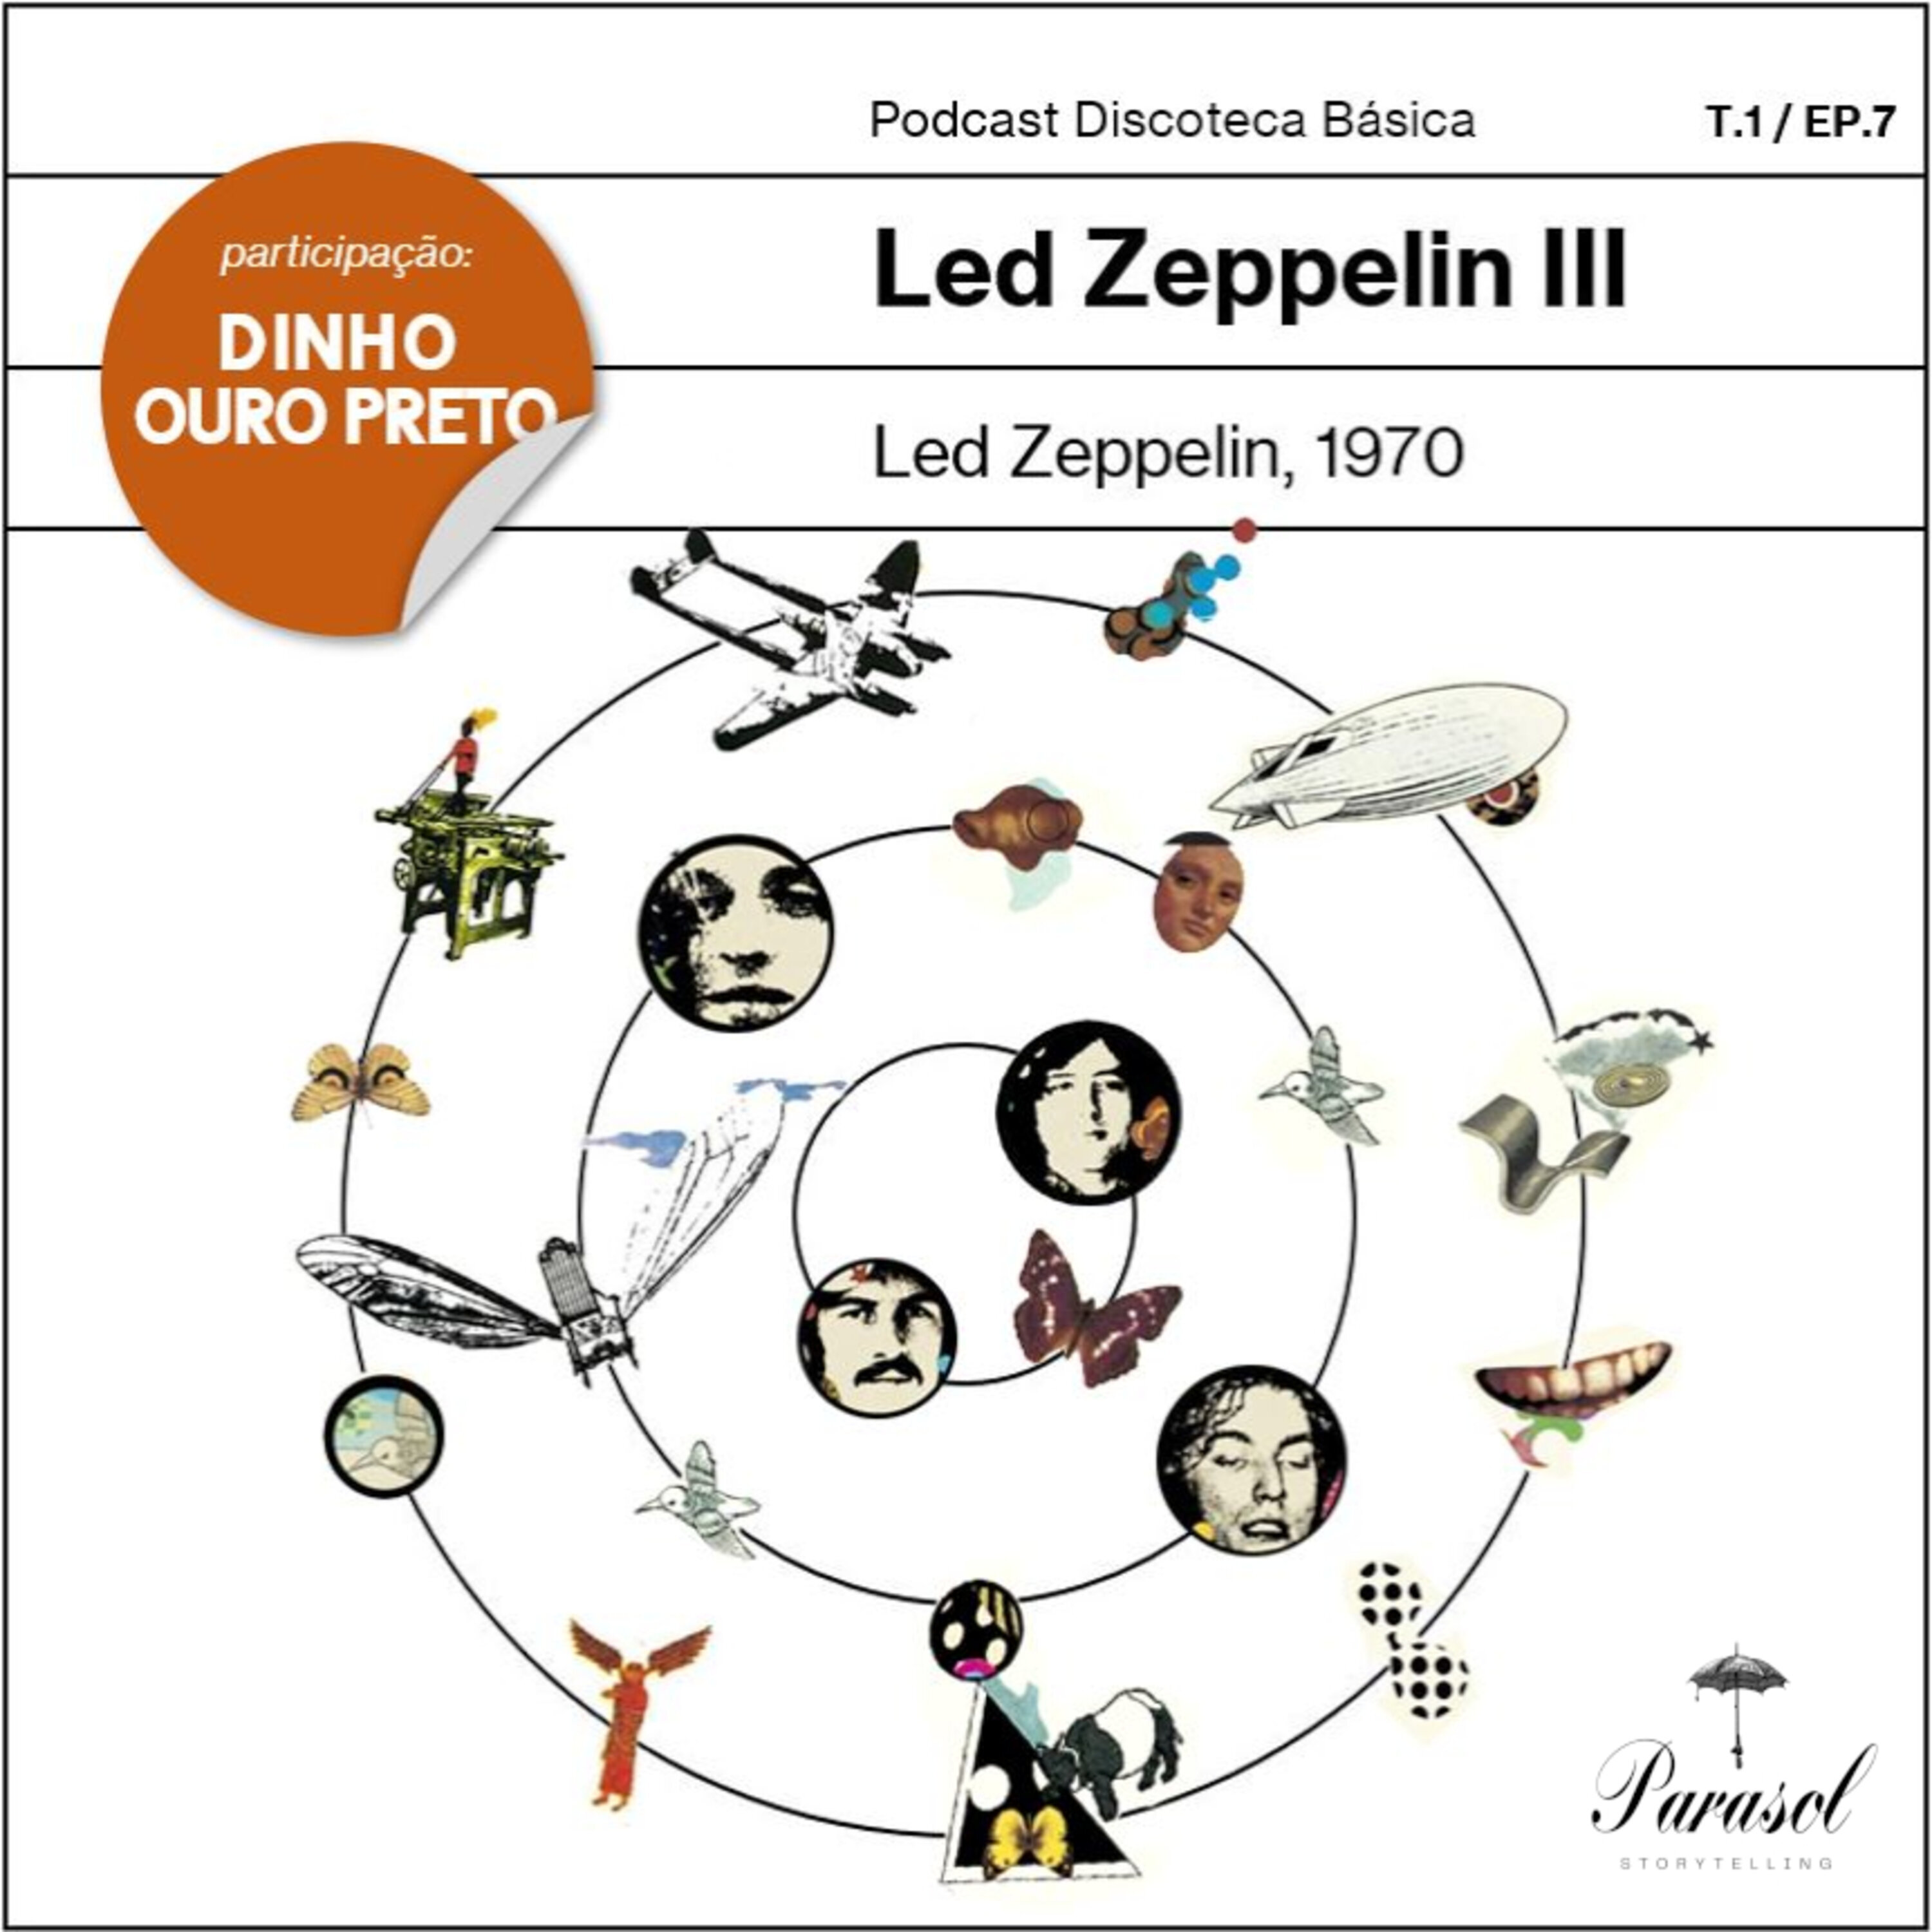 T01E07: Led Zeppelin III - Led Zeppelin (1970)